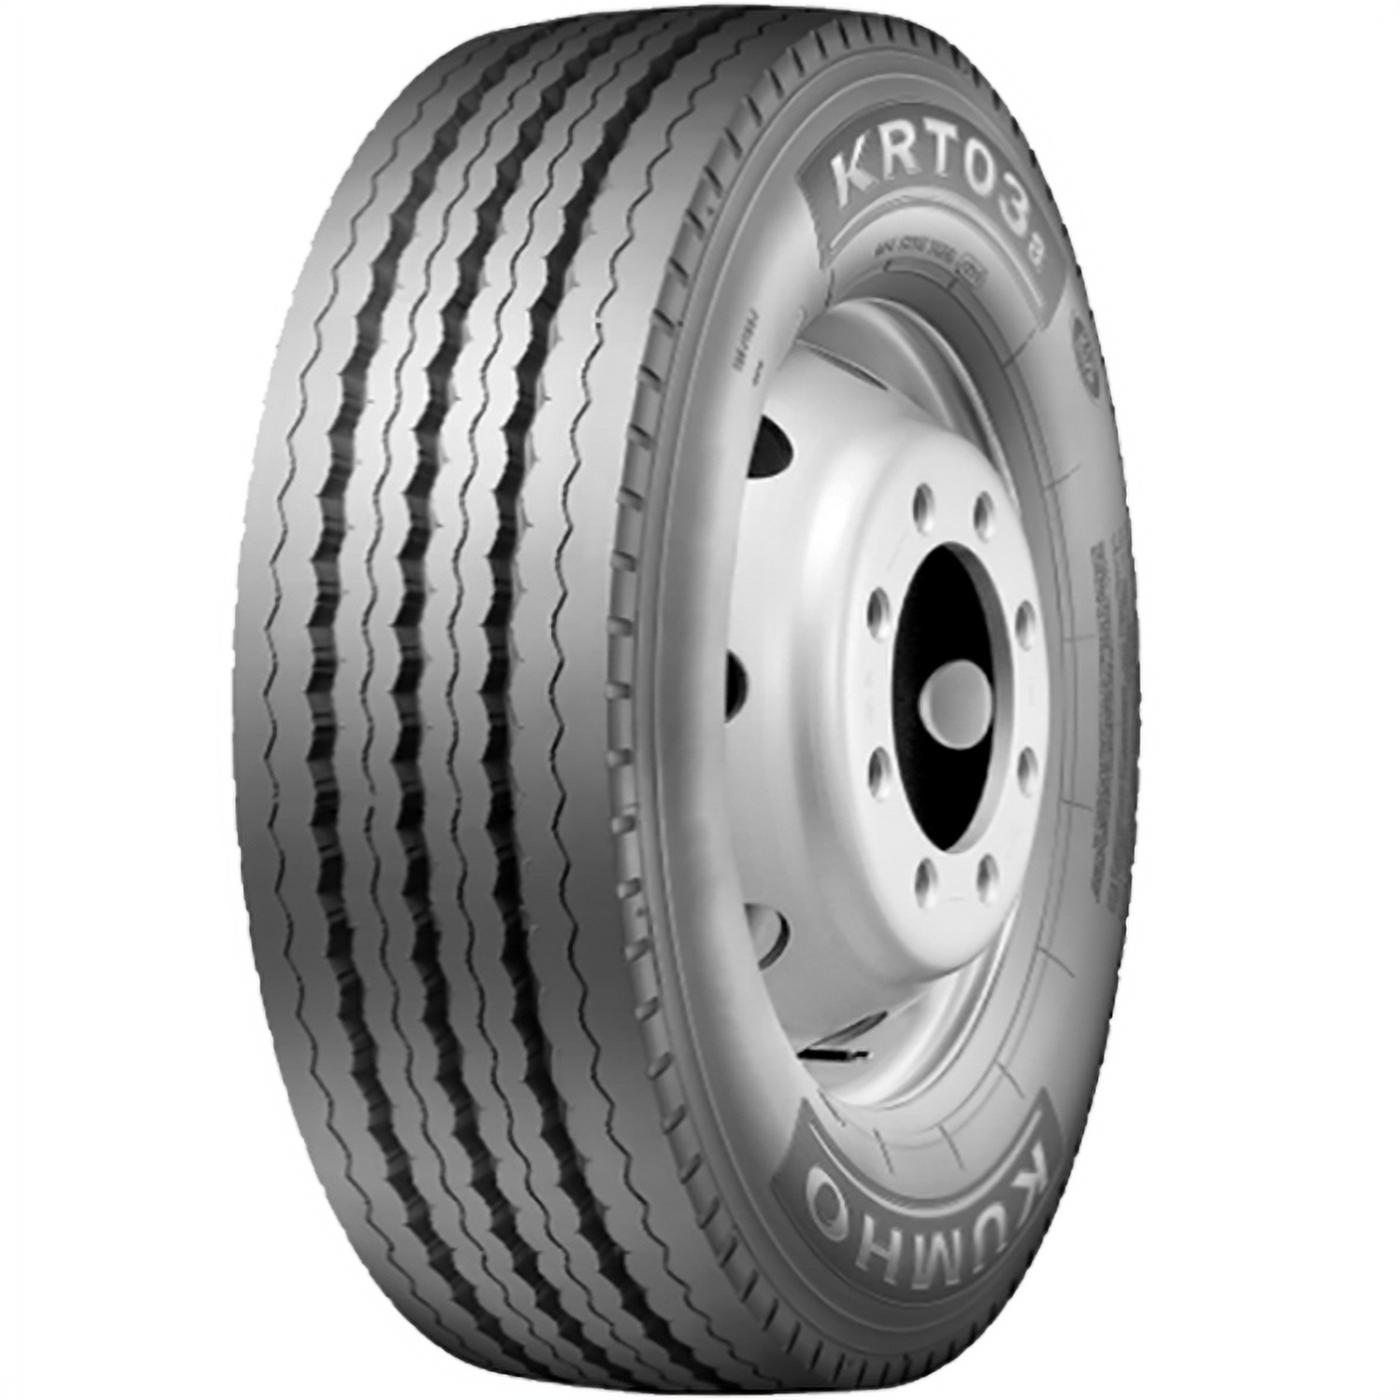 Gomme Nuove Kumho 245/70 R17.5 143/141J 16PR RT03 M+S (8.00mm) pneumatici nuovi Estivo